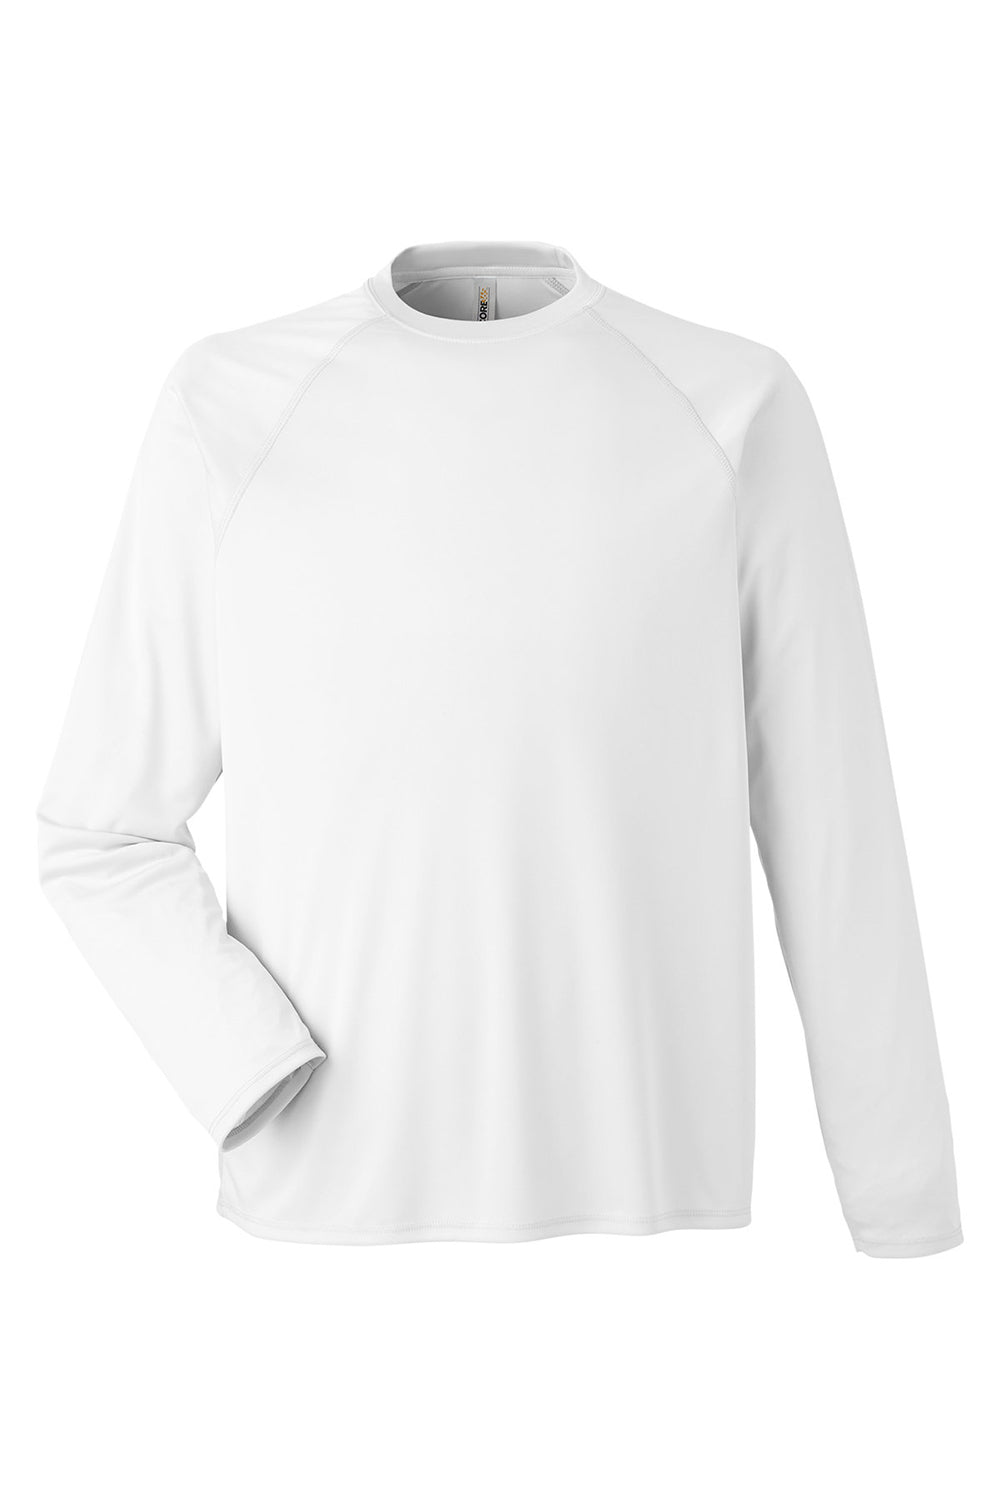 Core 365 CE110 Mens Ultra MVP Raglan Long Sleeve T-Shirt White Flat Front